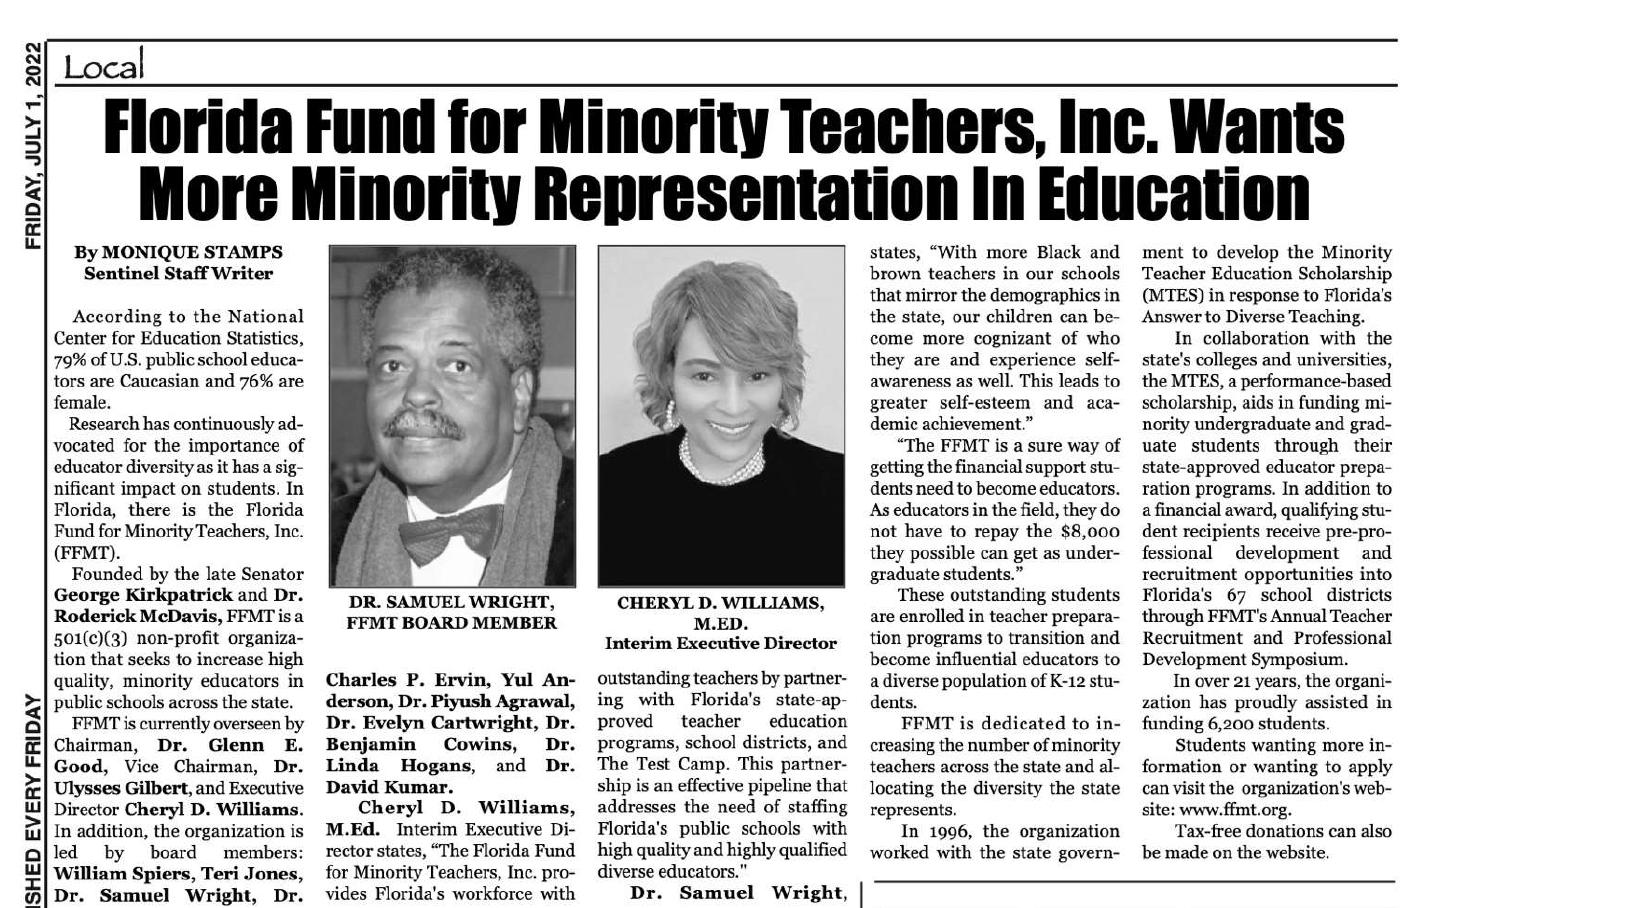 Florida Fund For Minority Teachers - More Minority Representation in Education